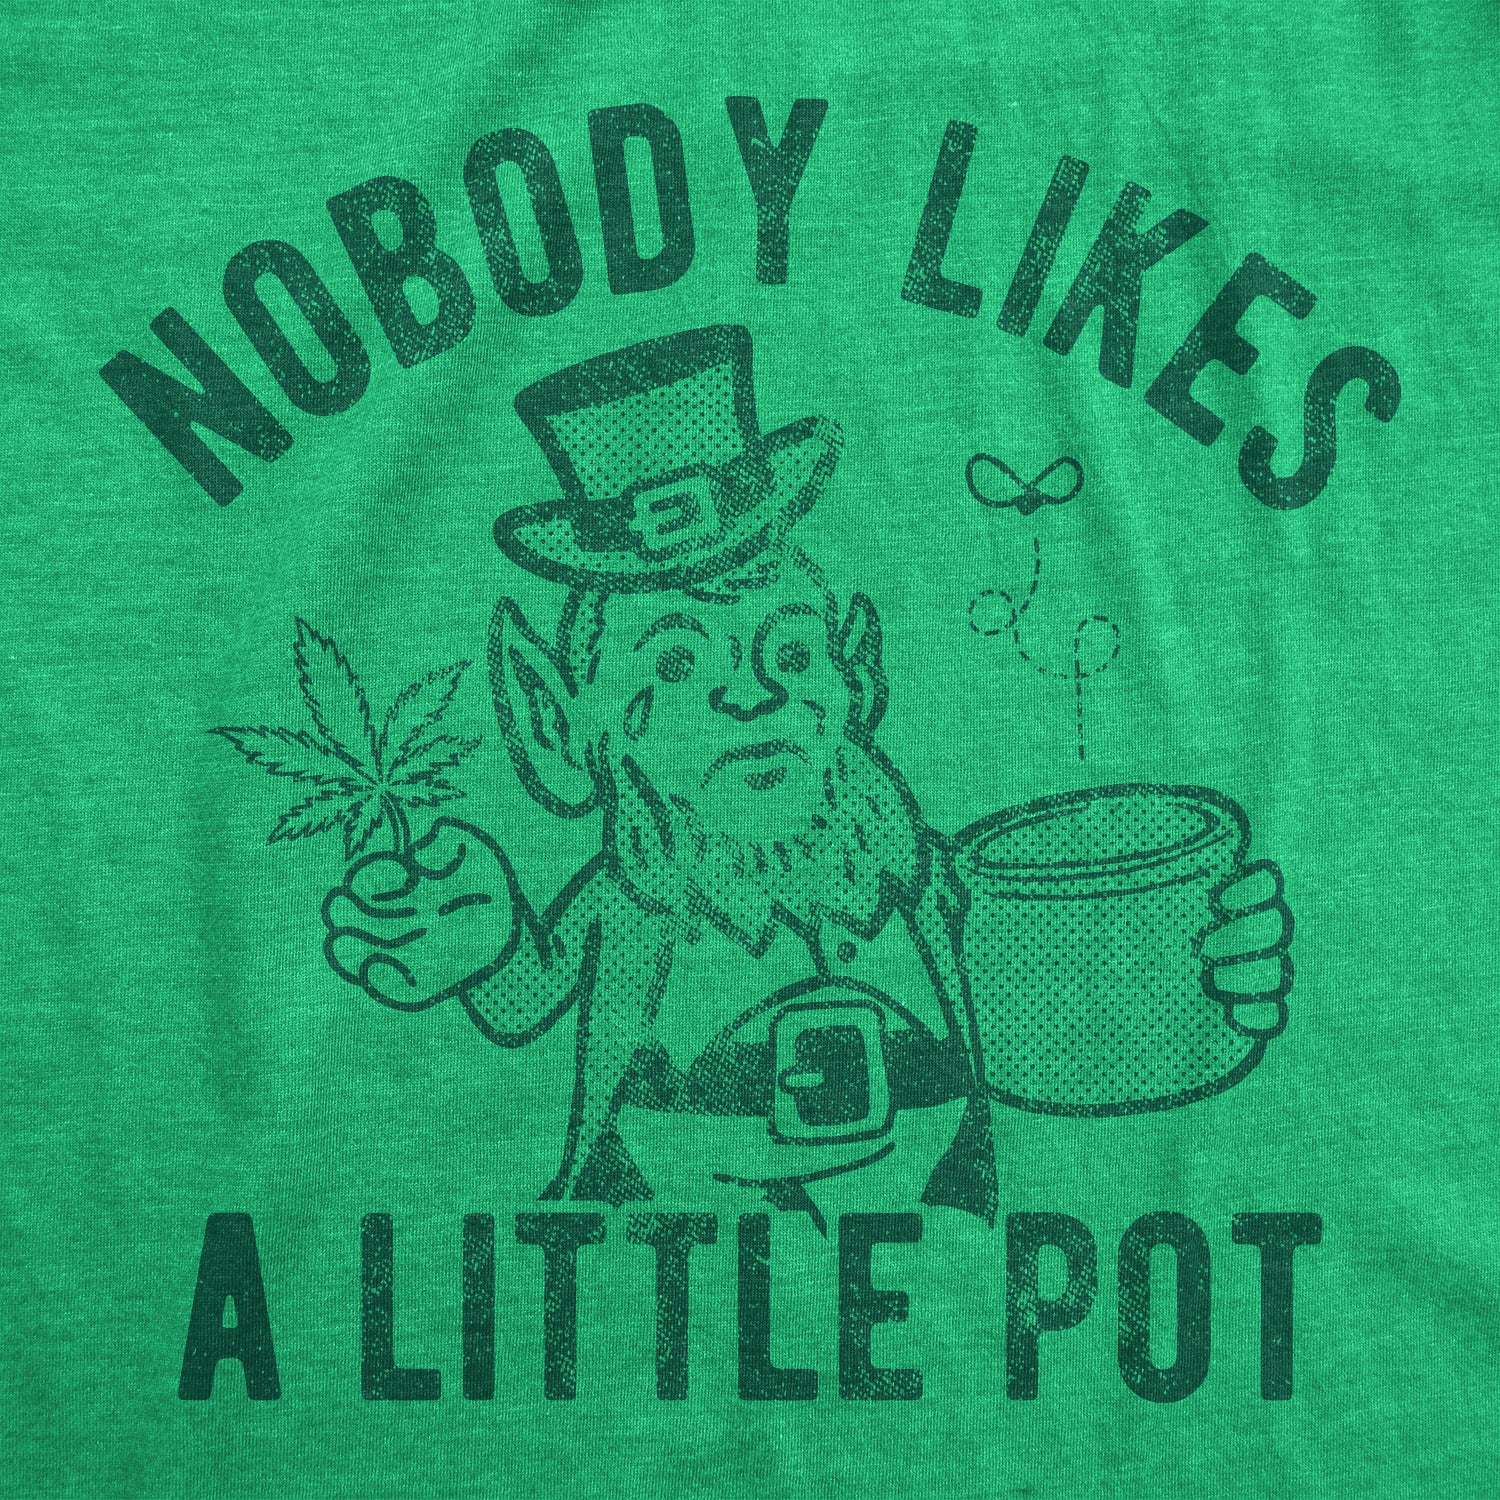 Funny Heather Green Nobody Likes A Little Pot Womens T Shirt Nerdy Saint Patrick's Day 420 Tee